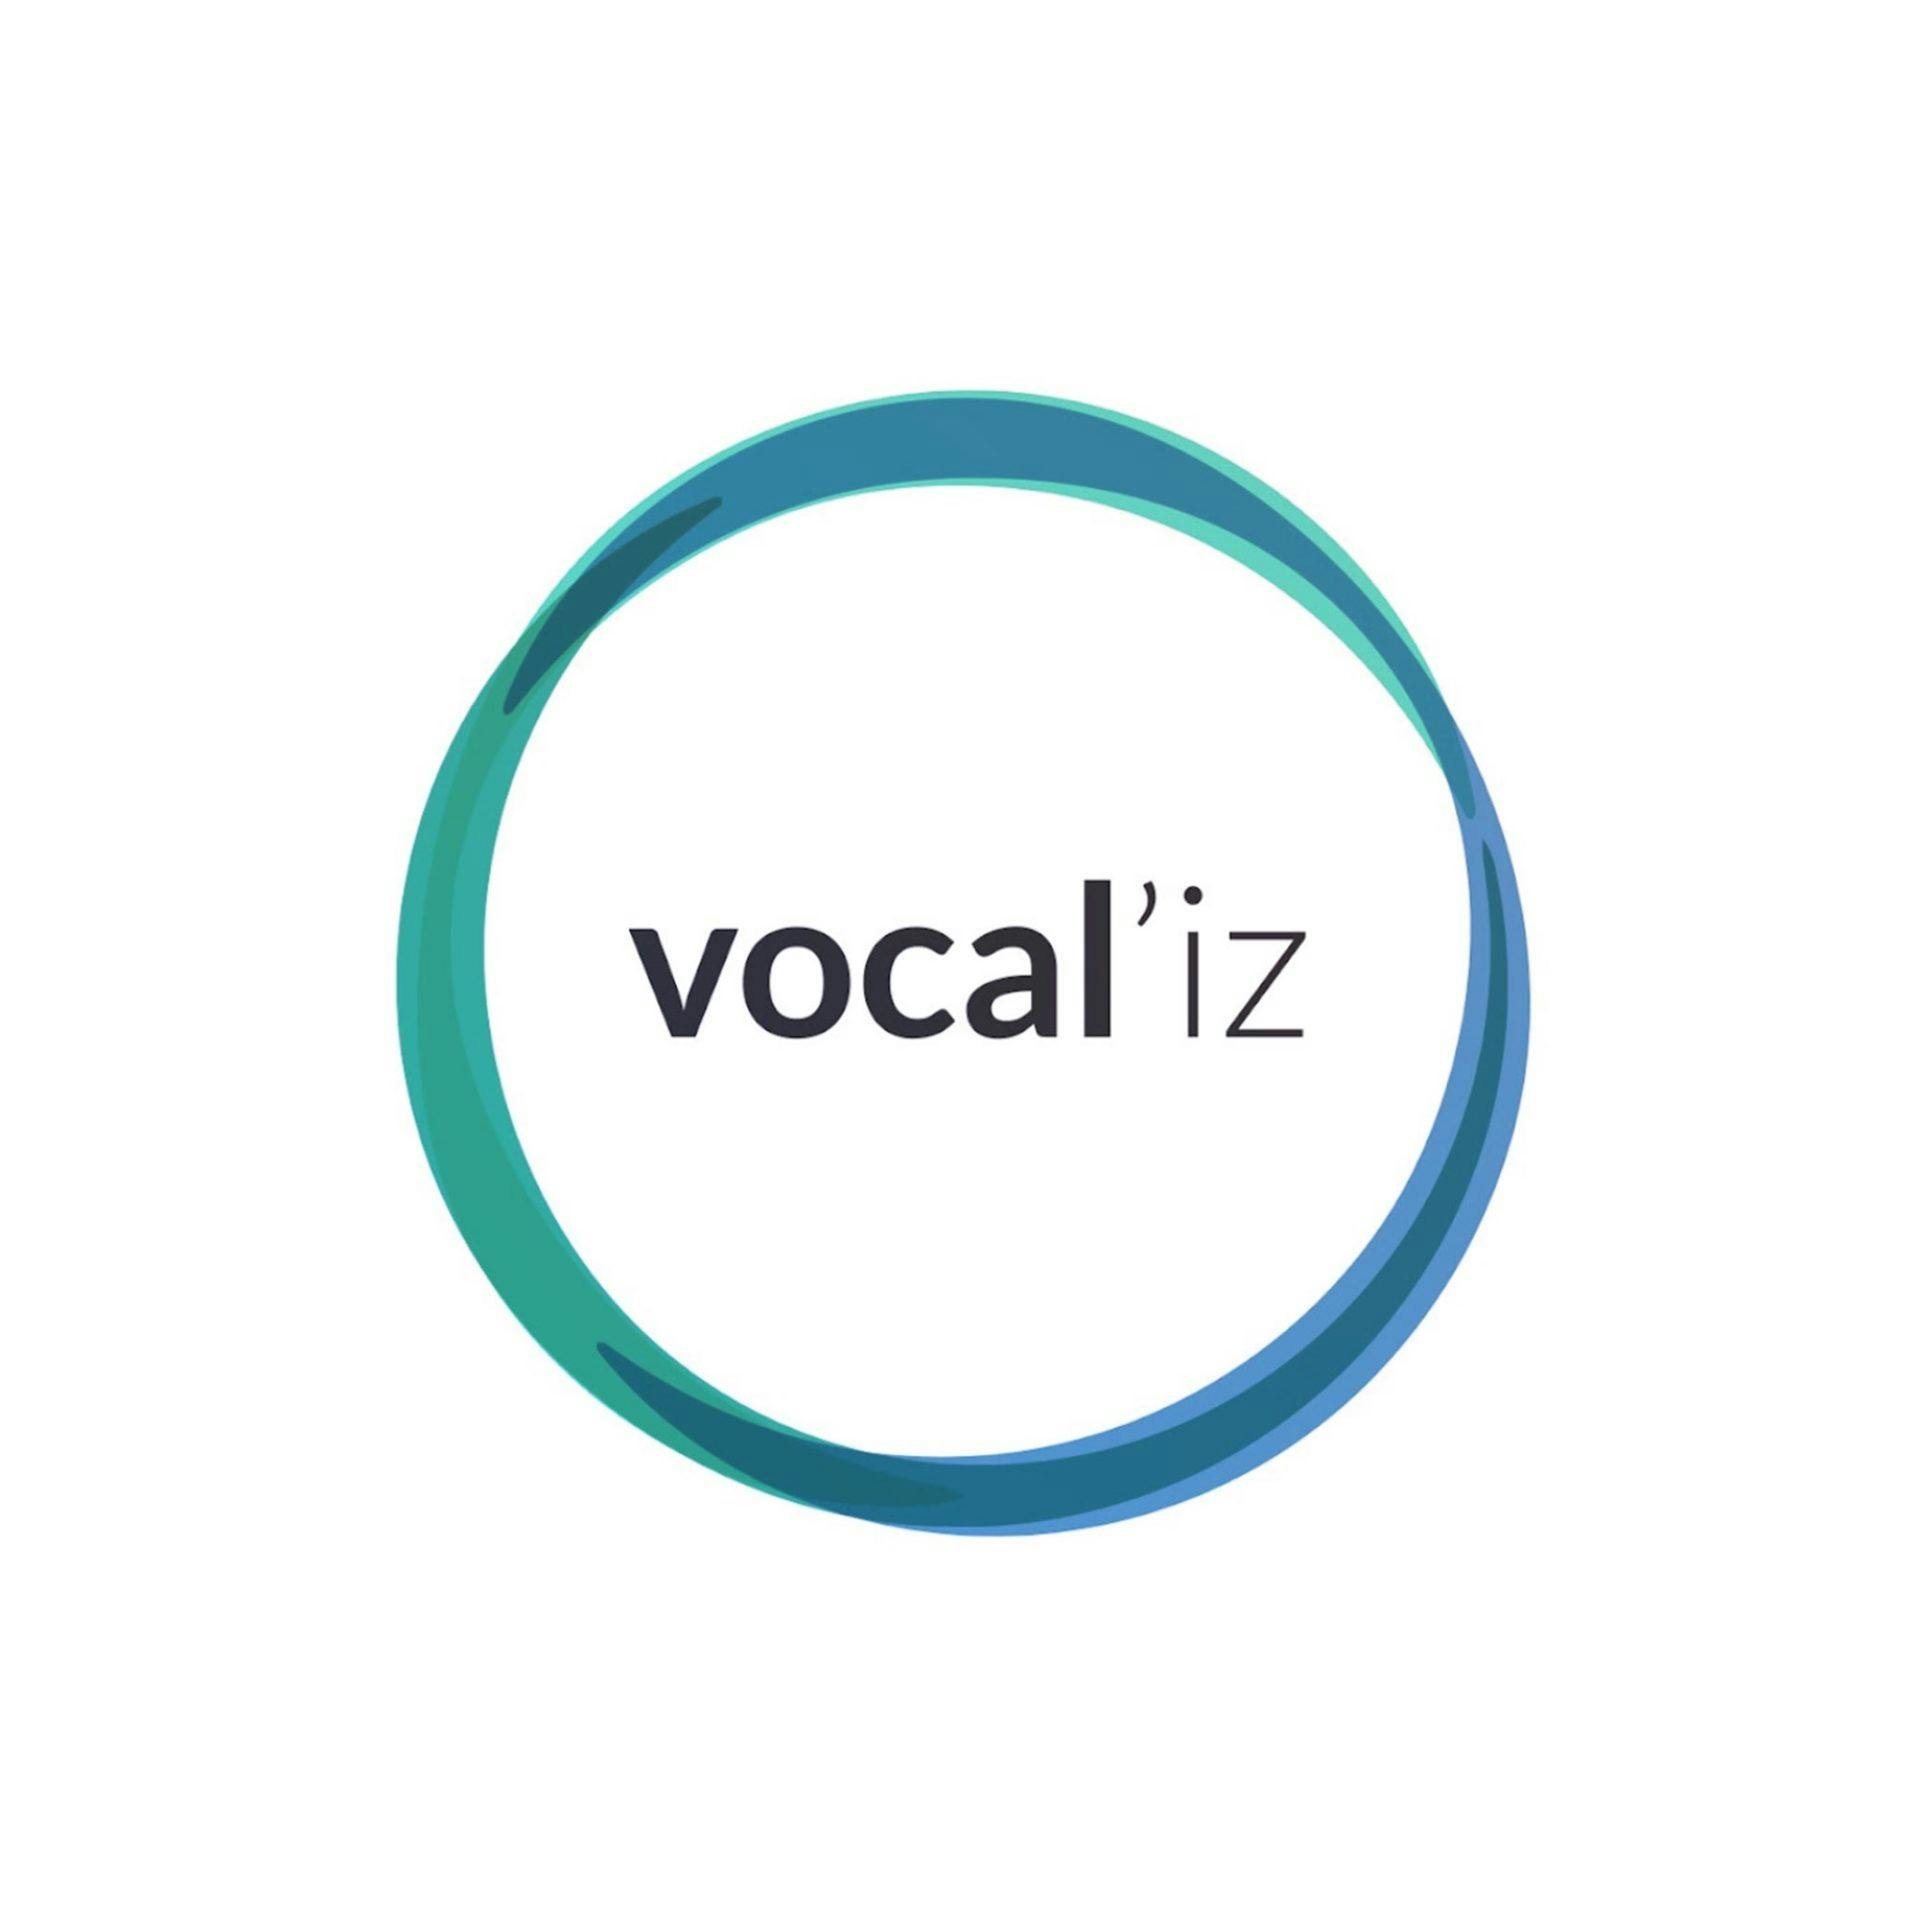 The Vocal’iz app from MGEN